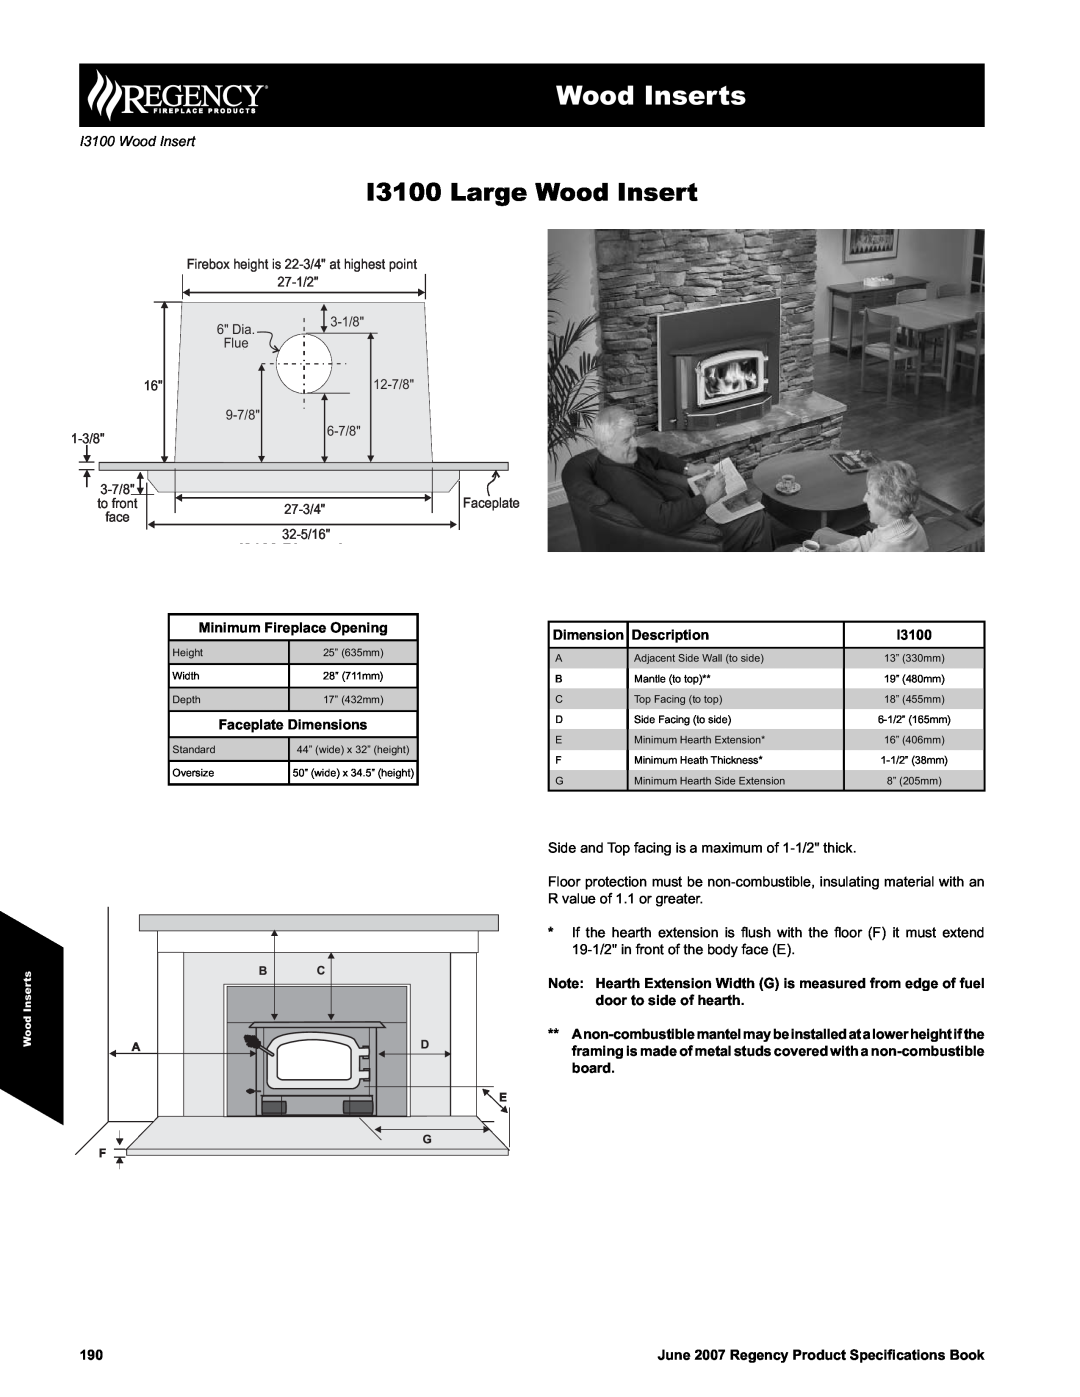 Regency specifications Wood Inserts, I3100 Large Wood Insert, I3100 Wood Insert, Minimum Fireplace Opening, Description 